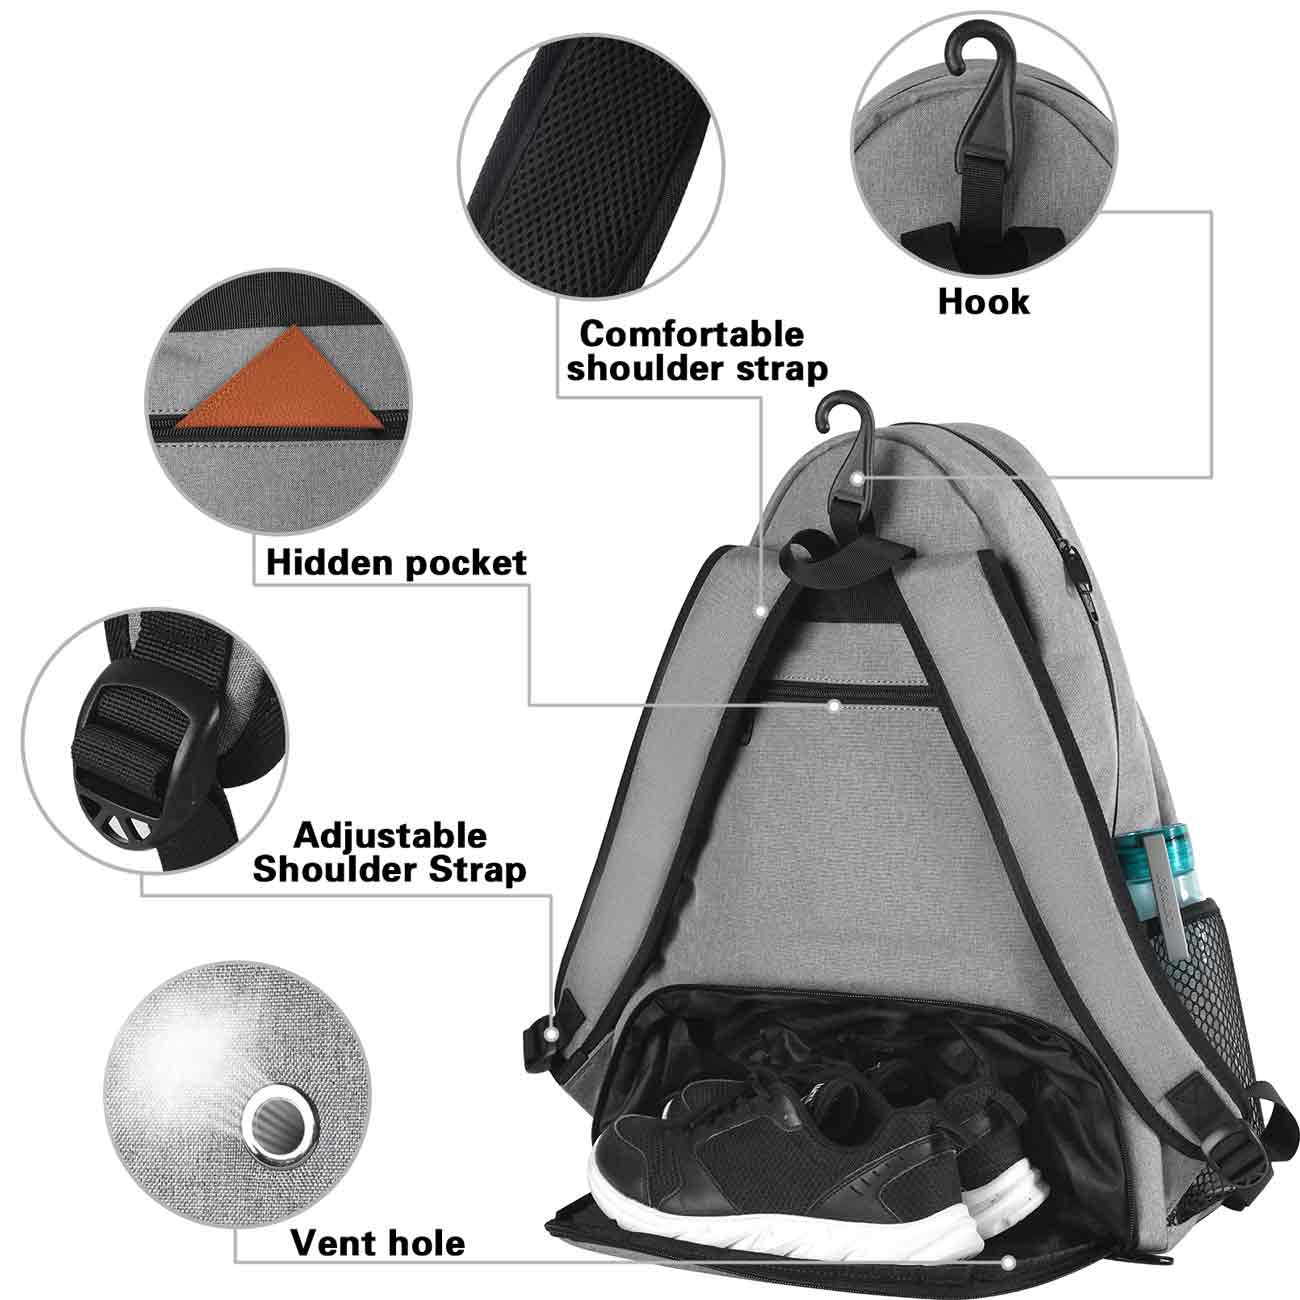 Matein Tennis Backpack-tennis bags for women